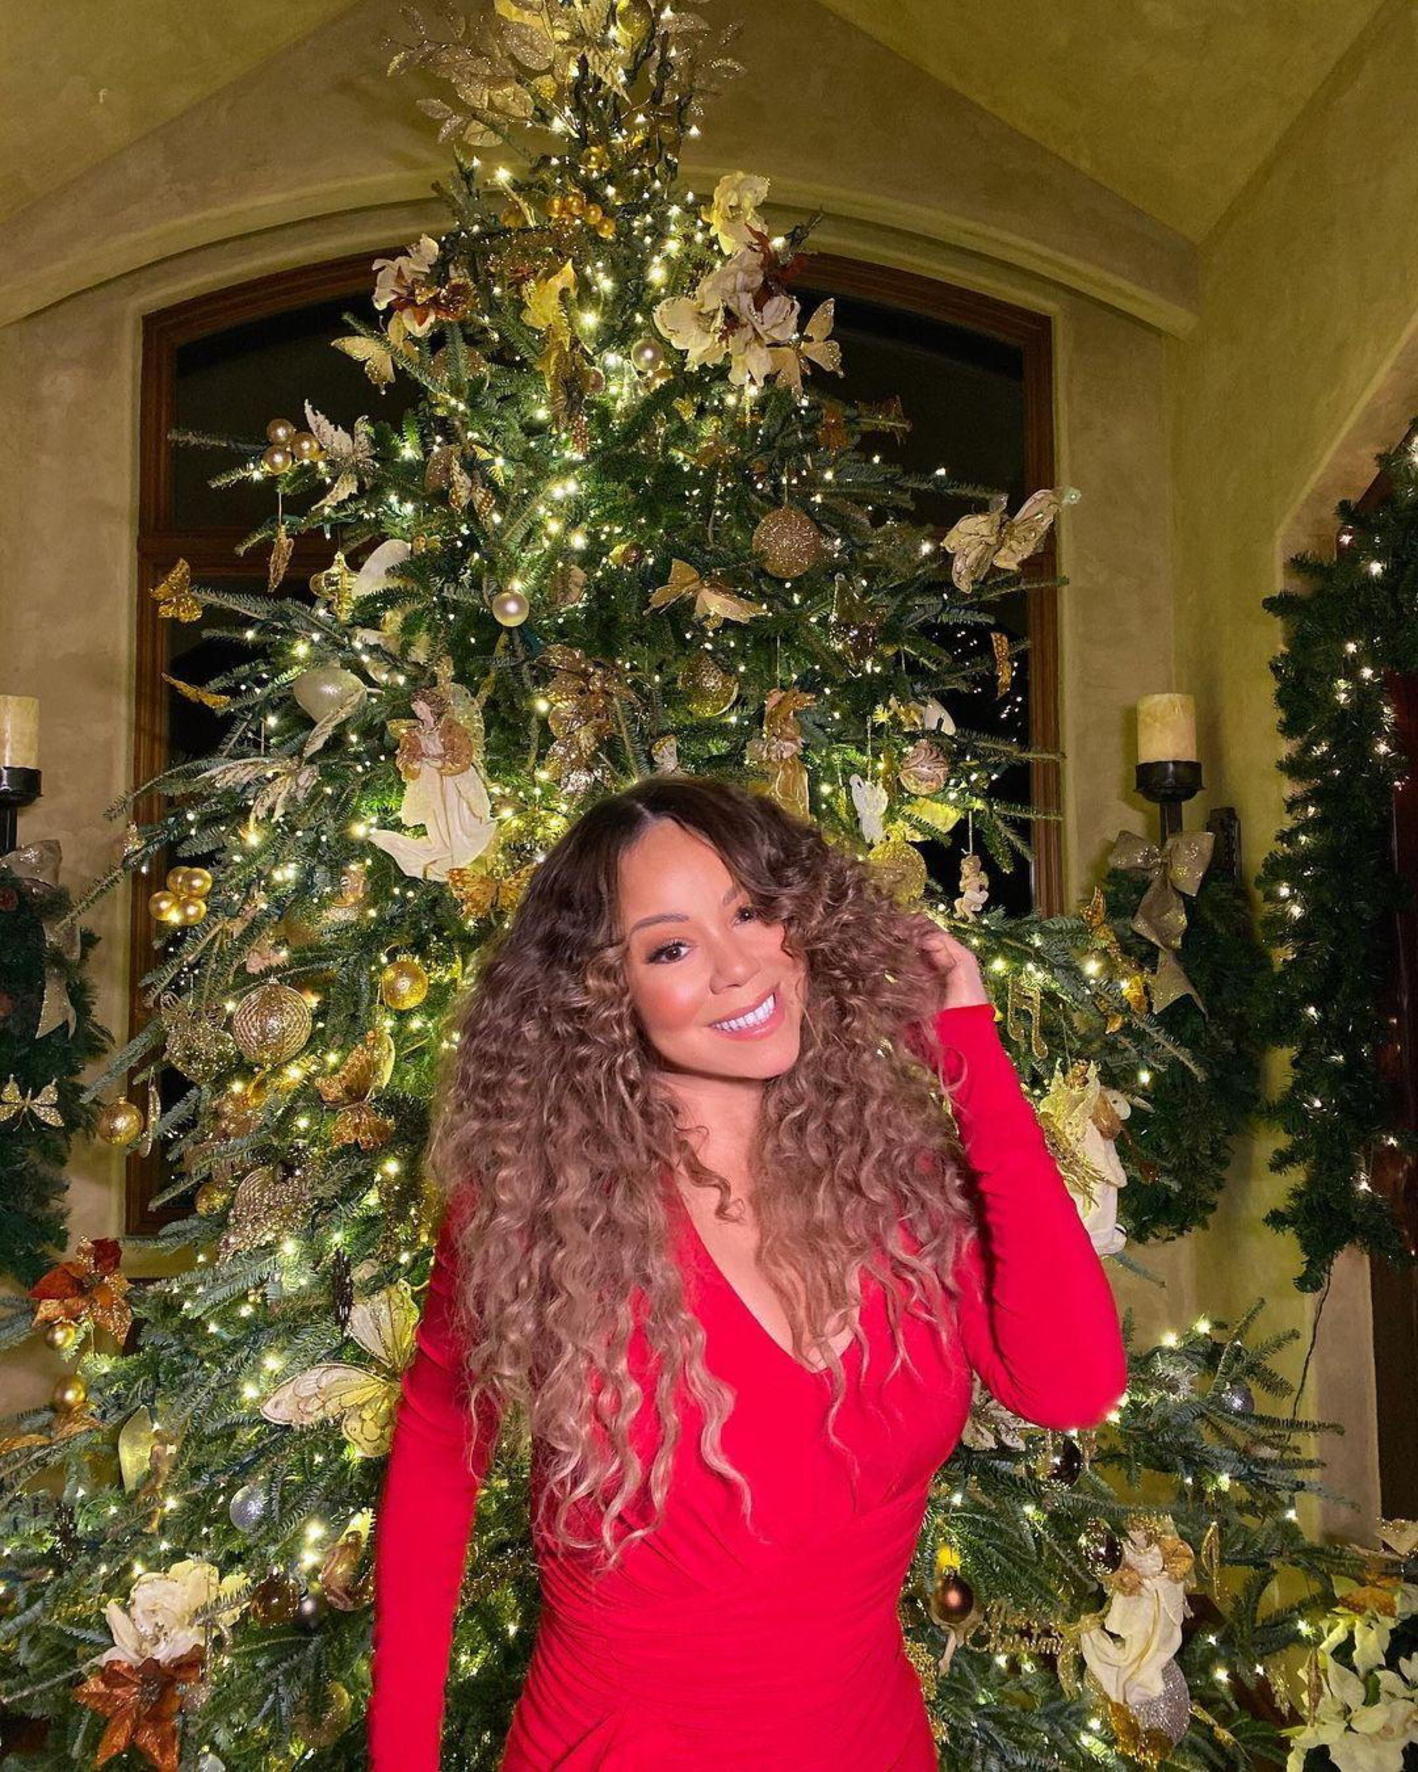 Say what?! All I want for Christmas a fost interzisă până în luna decembrie. Cum a reacționat Mariah Carey?